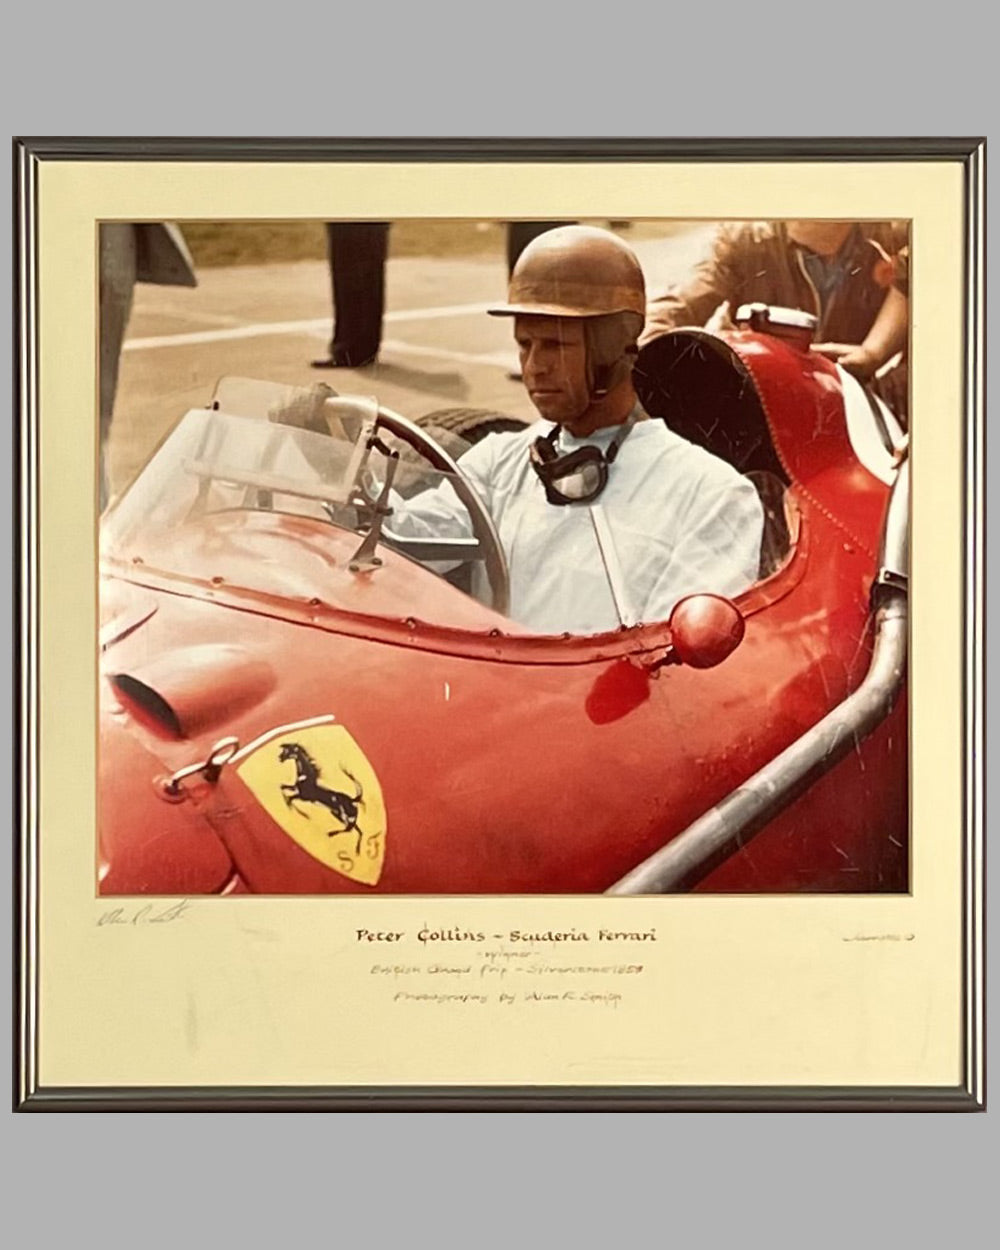 Peter Collins – Scuderia Ferrari color photograph by Alan Smith